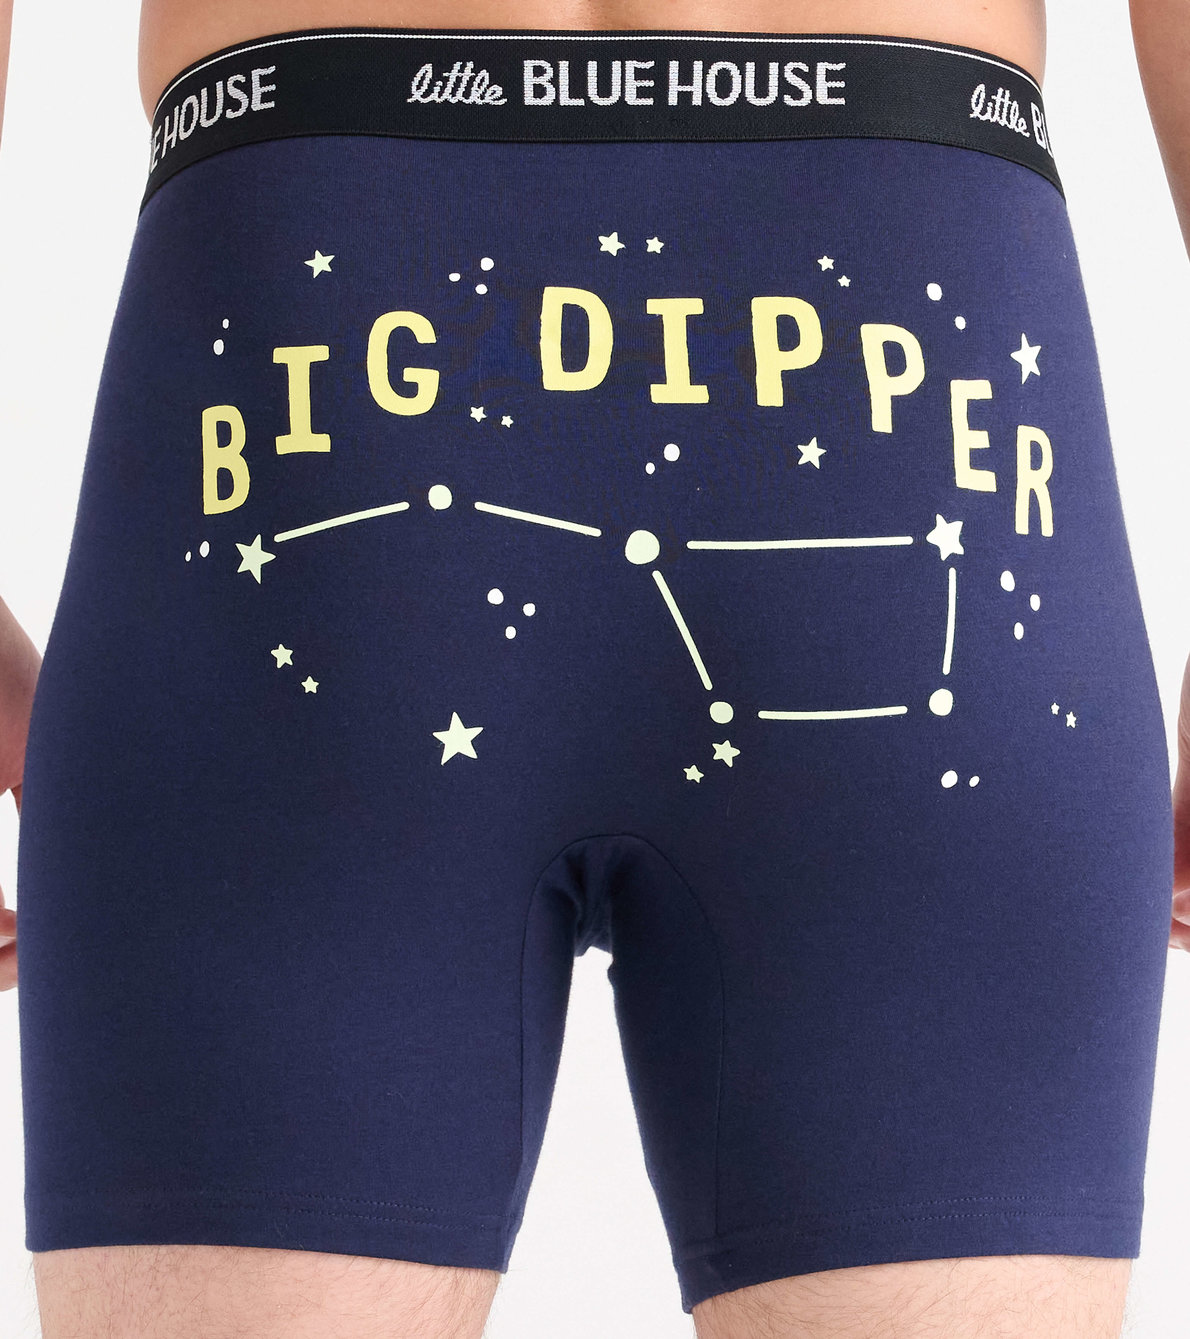 View larger image of Big Dipper Men's Boxer Briefs